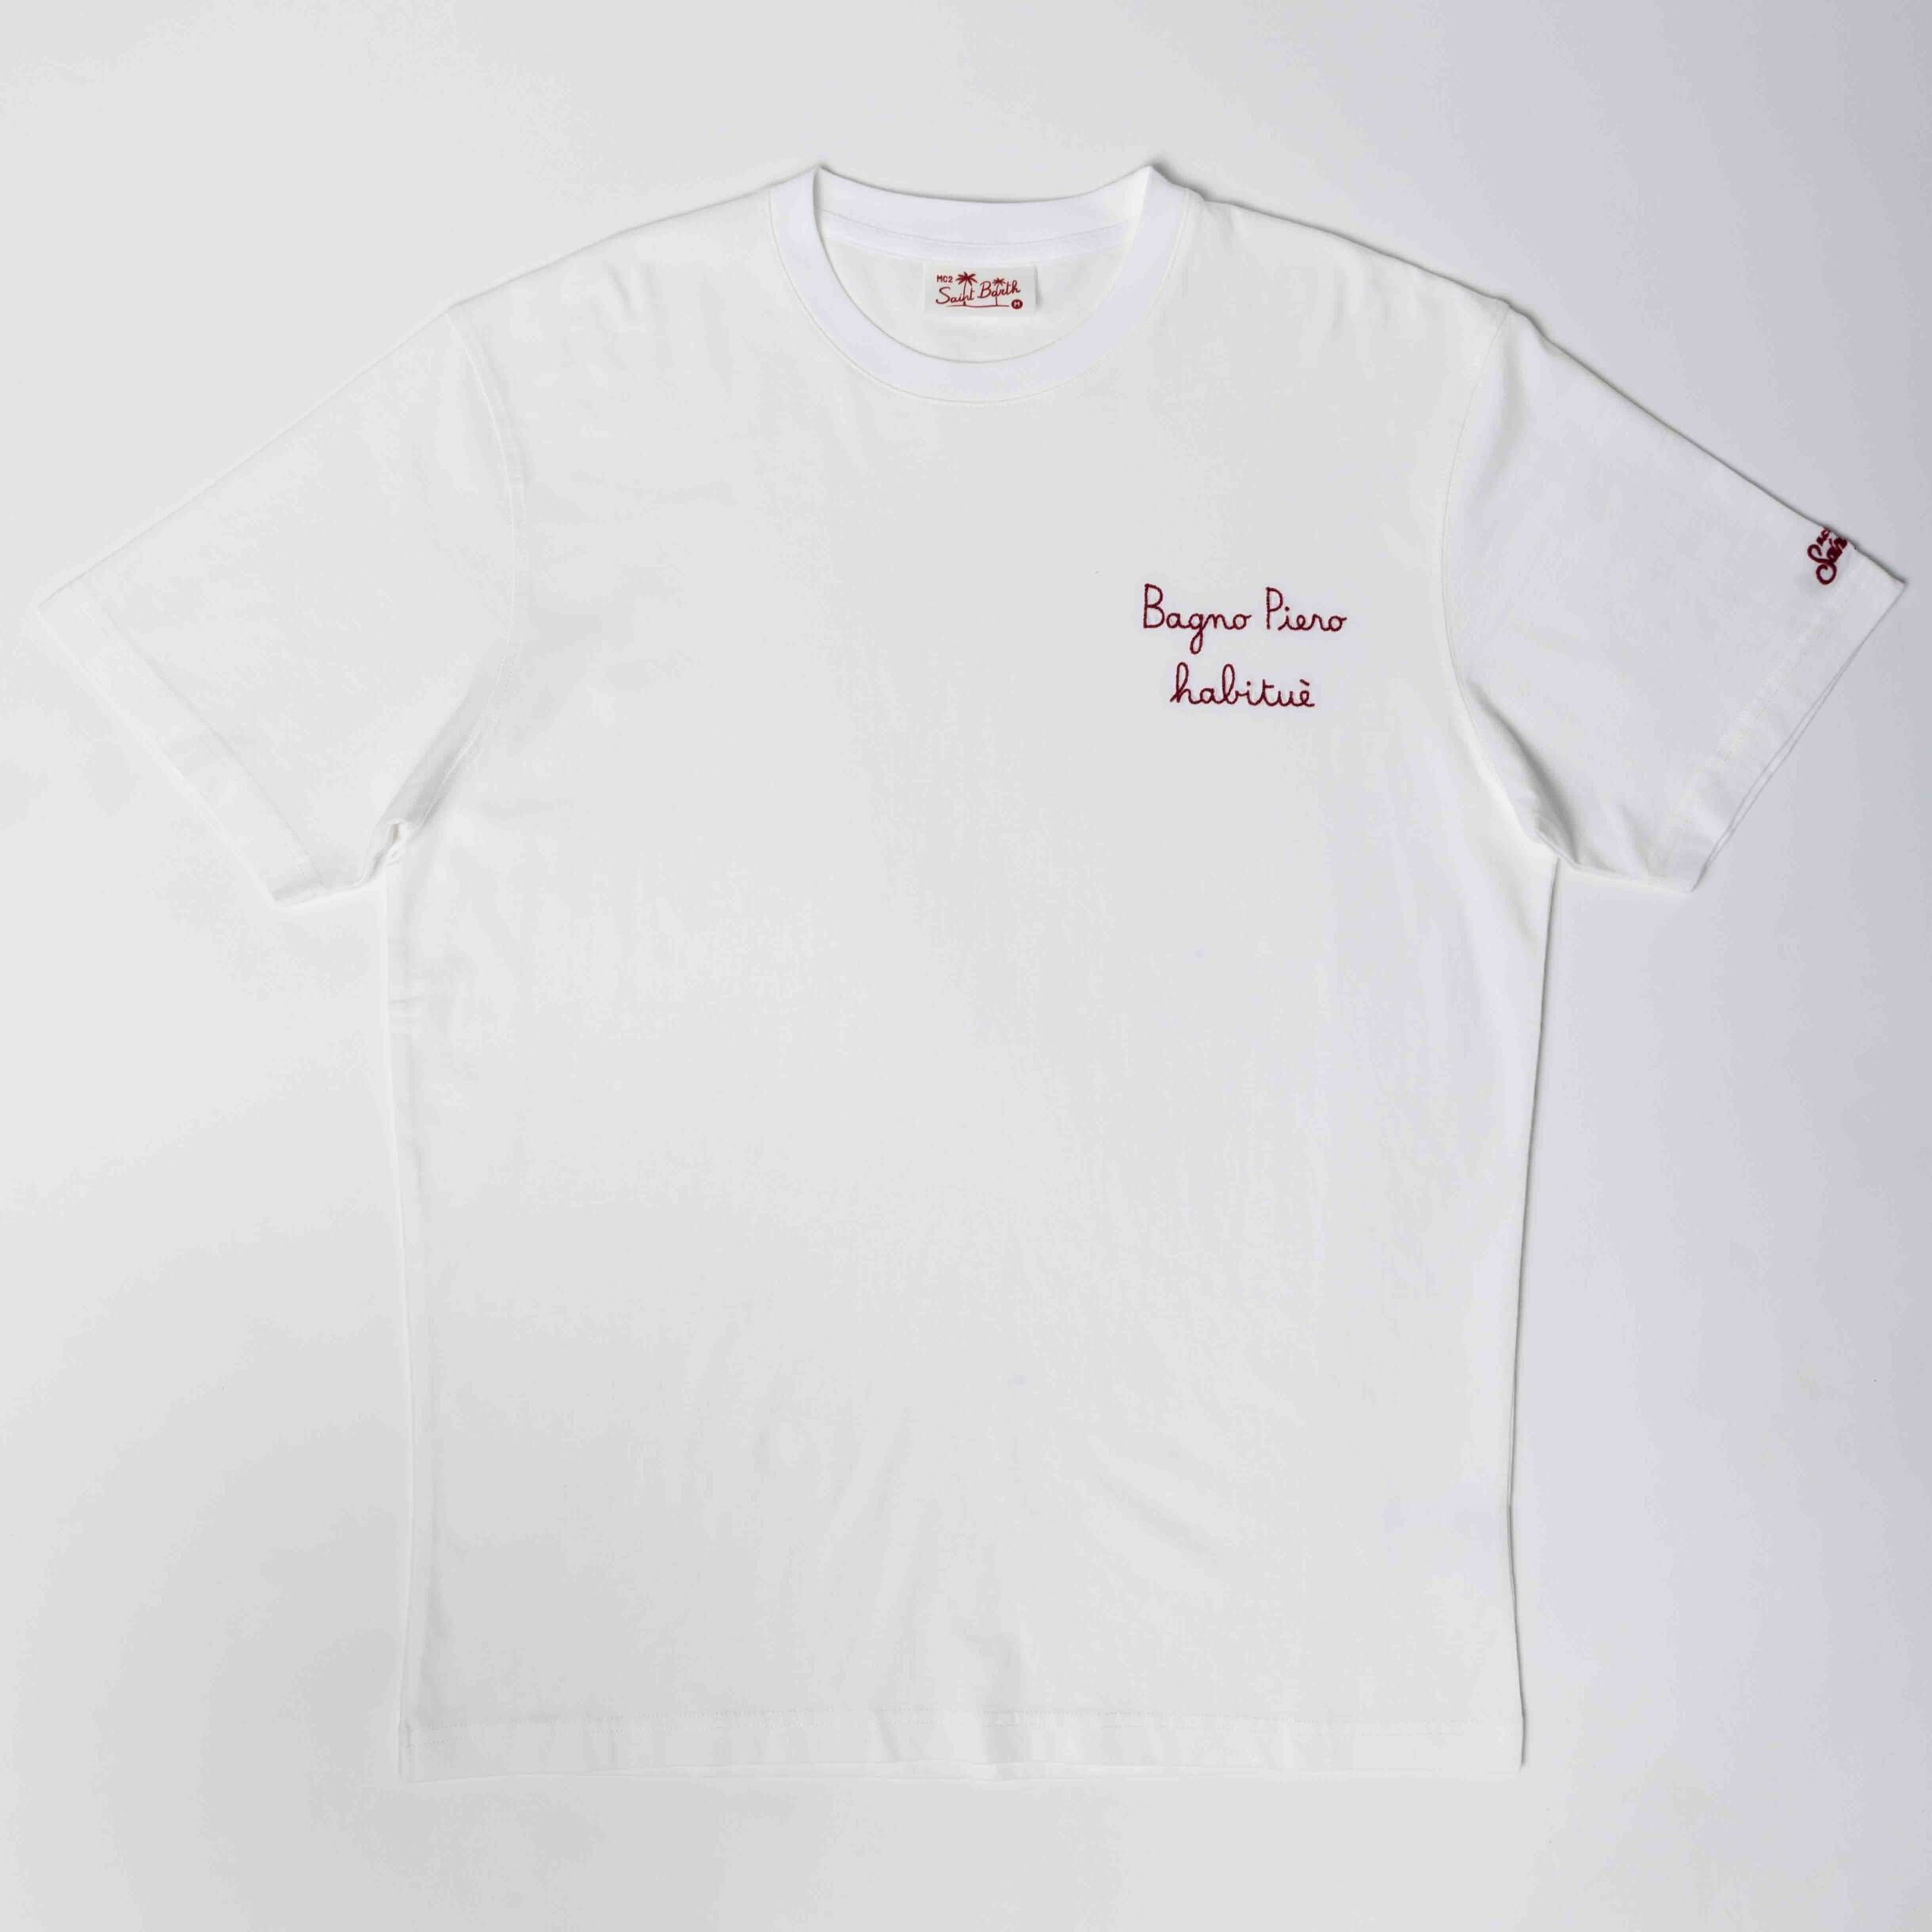 Bagno Piero Habituè men's t-shirt